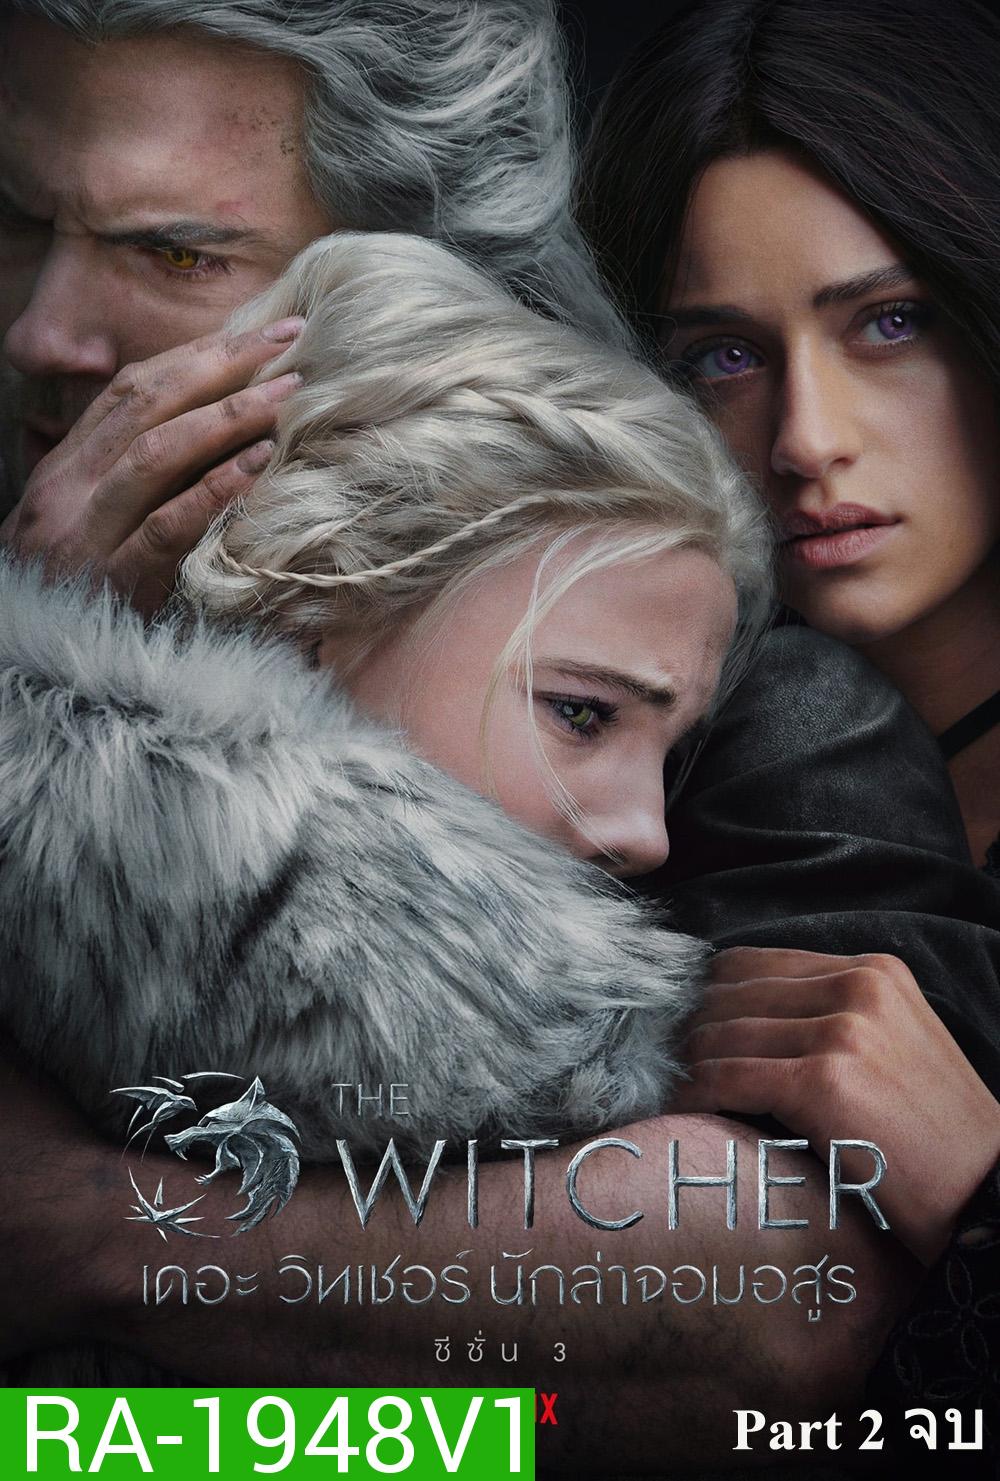 The Witcher Season 3 เดอะ วิทเชอร์ นักล่าจอมอสูร ปี 3 Part 2 (ตอนที่ 6-8 จบ)